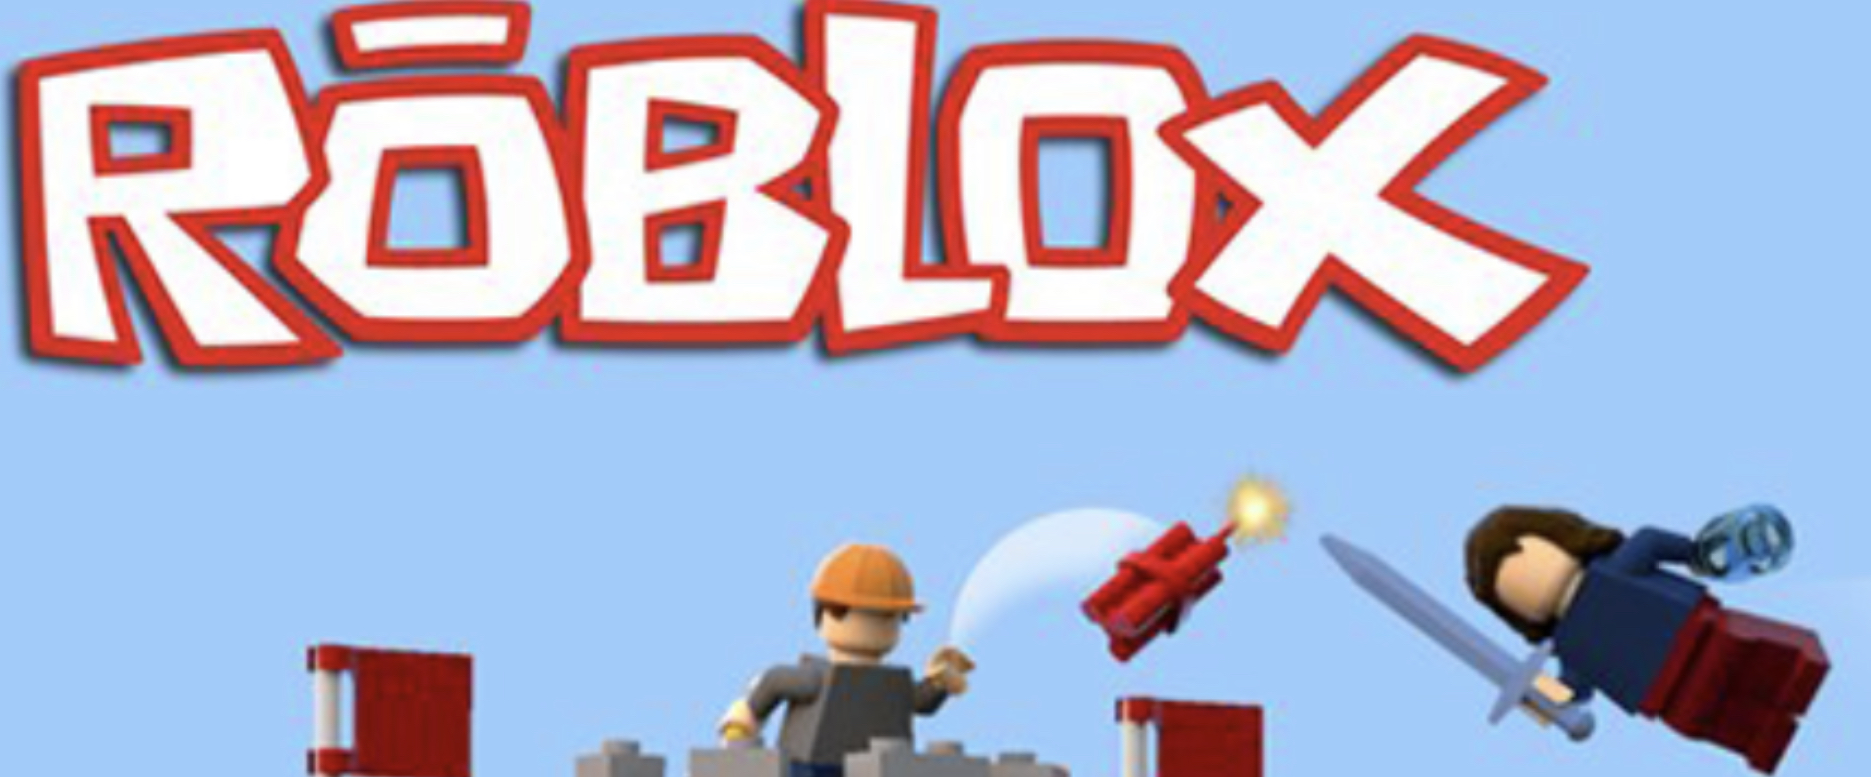 roblox lego figures download